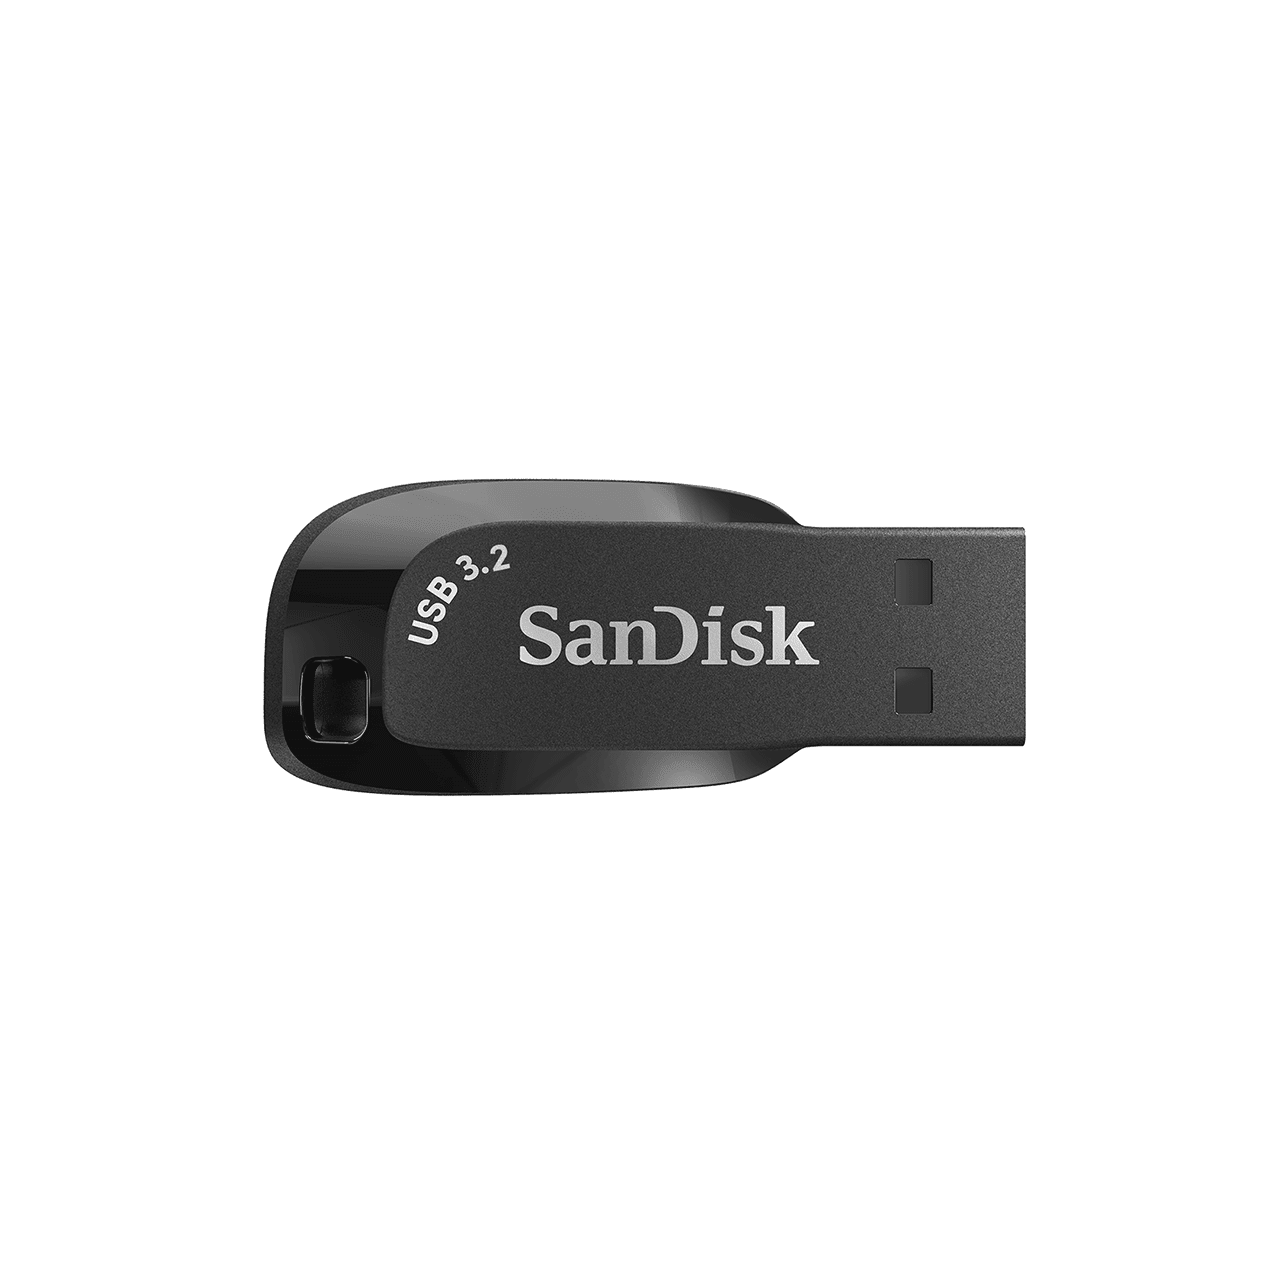 SanDisk Ultra Shift USB 3.2 Flash Drive 32GB Black - Image1